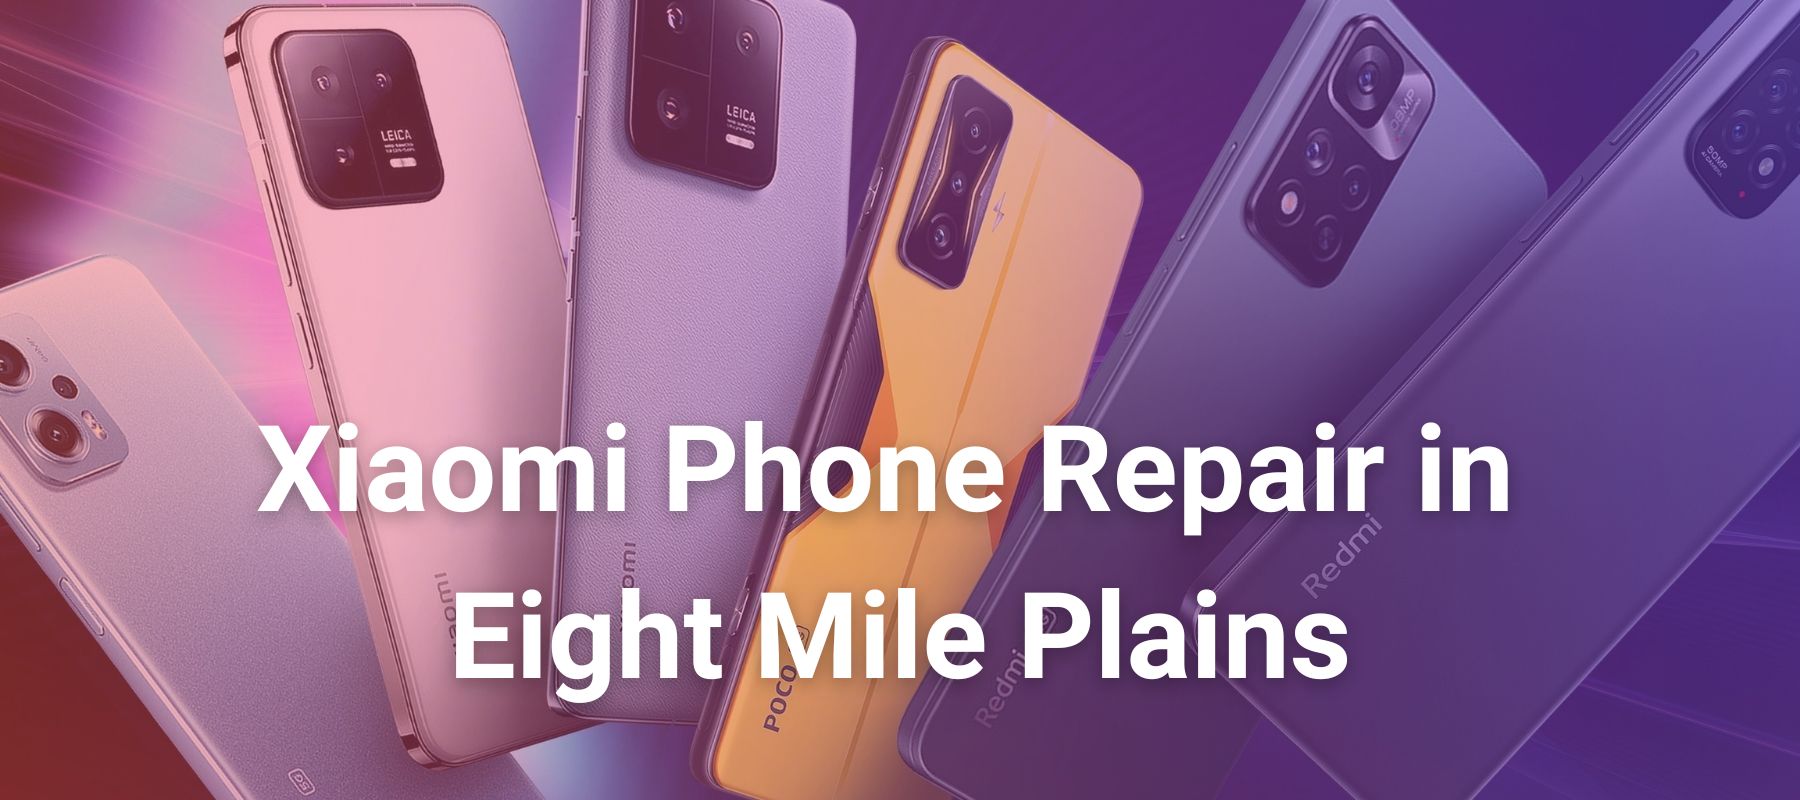 Xiaomi Phone Repair in Eight Mile Plains